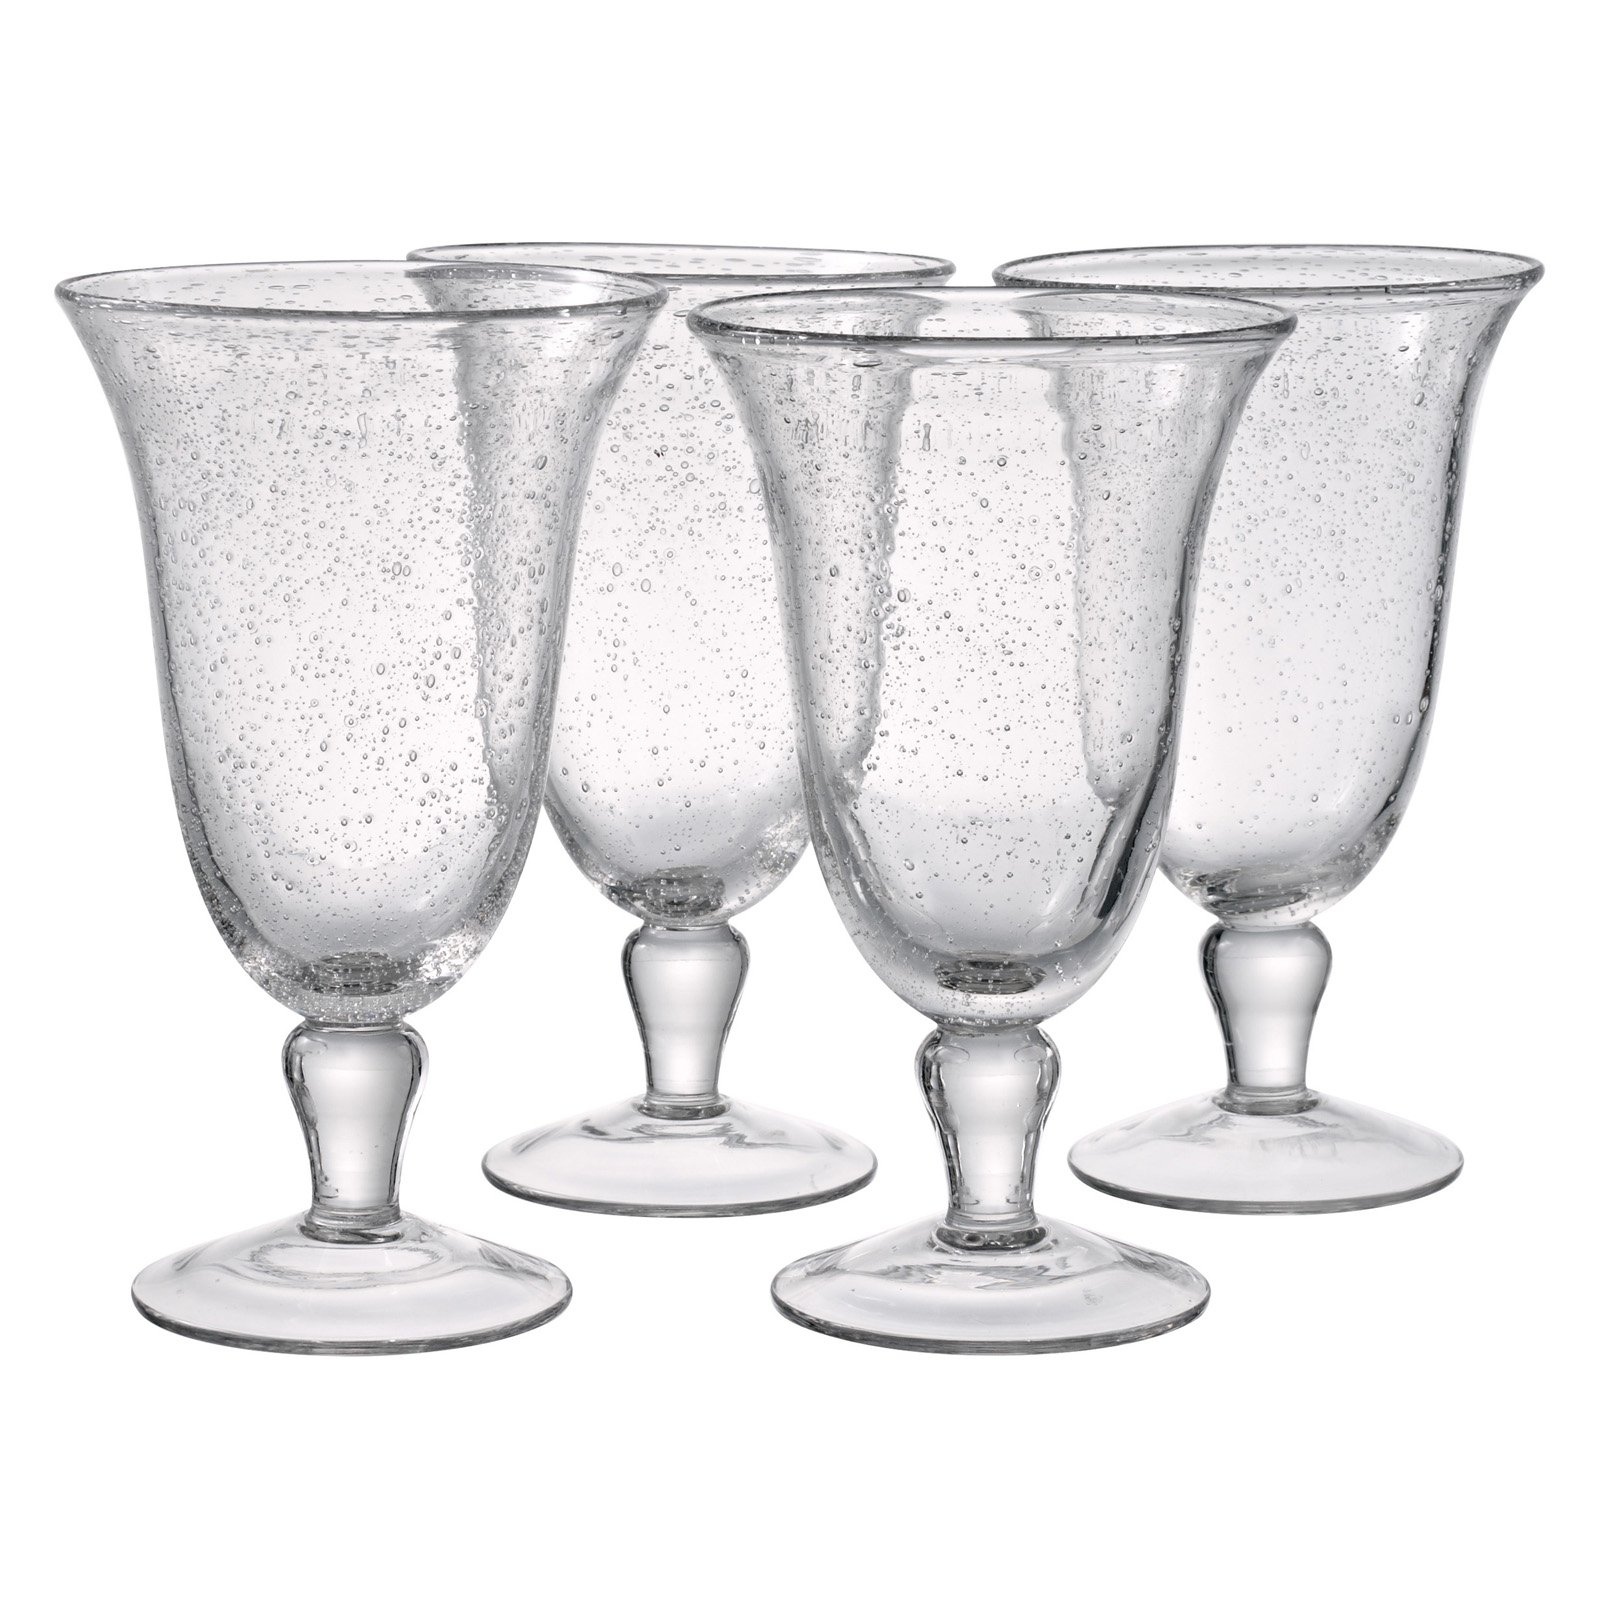 Artland Inc. Iris Ice Tea Glasses - Set of 4 - image 1 of 2